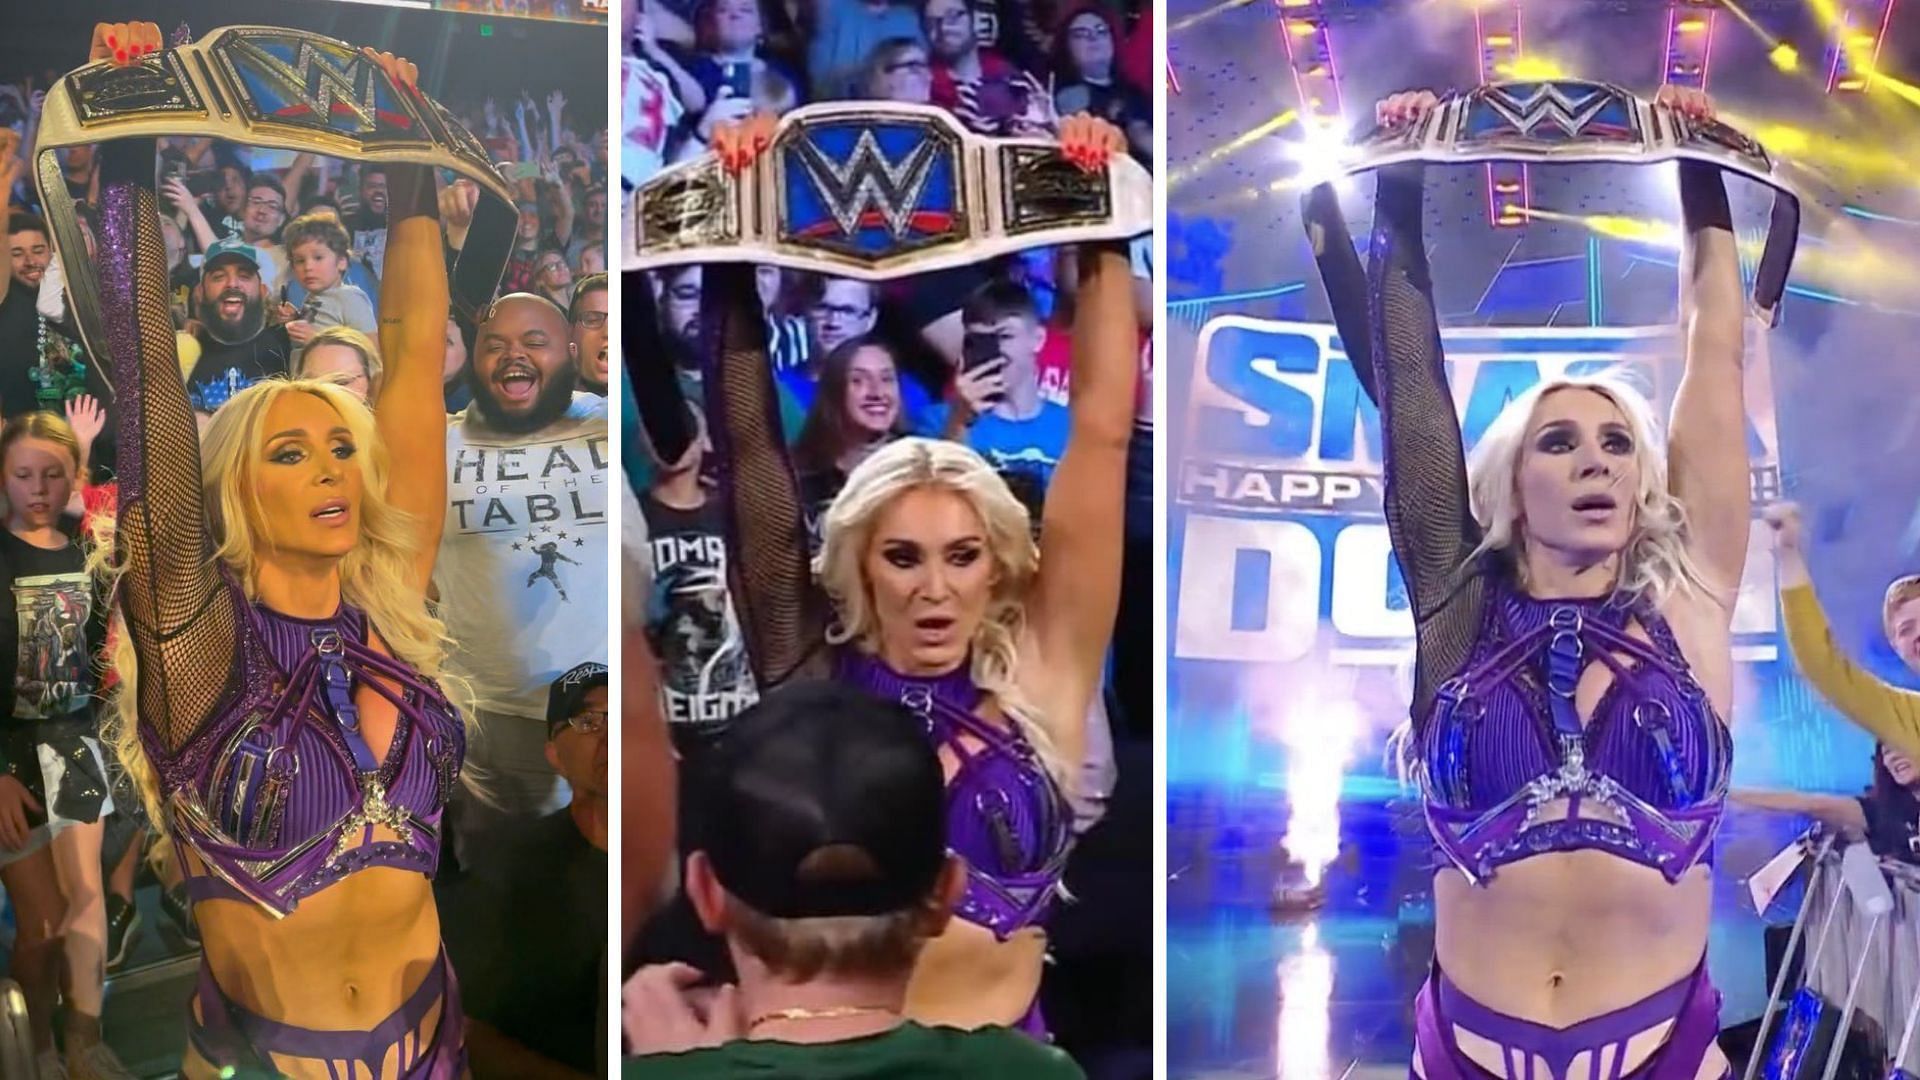 Charlotte Flair won the SmackDown Women